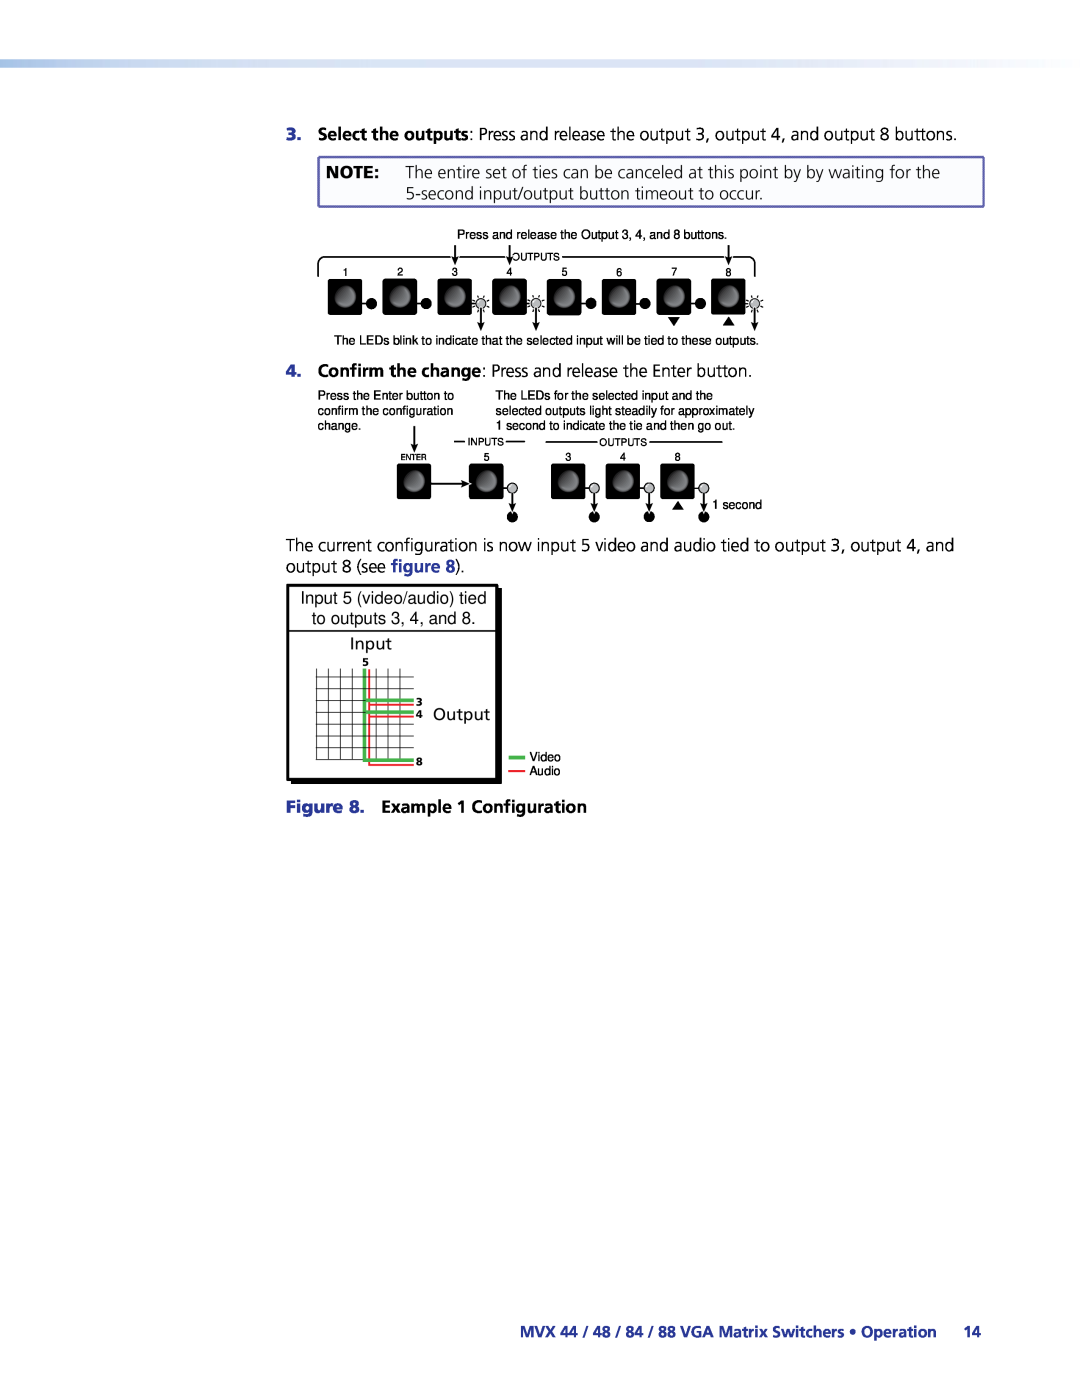 Extron electronic MVX 88, MVX 44, MVX 84, 48 manual Example 1 Configuration 